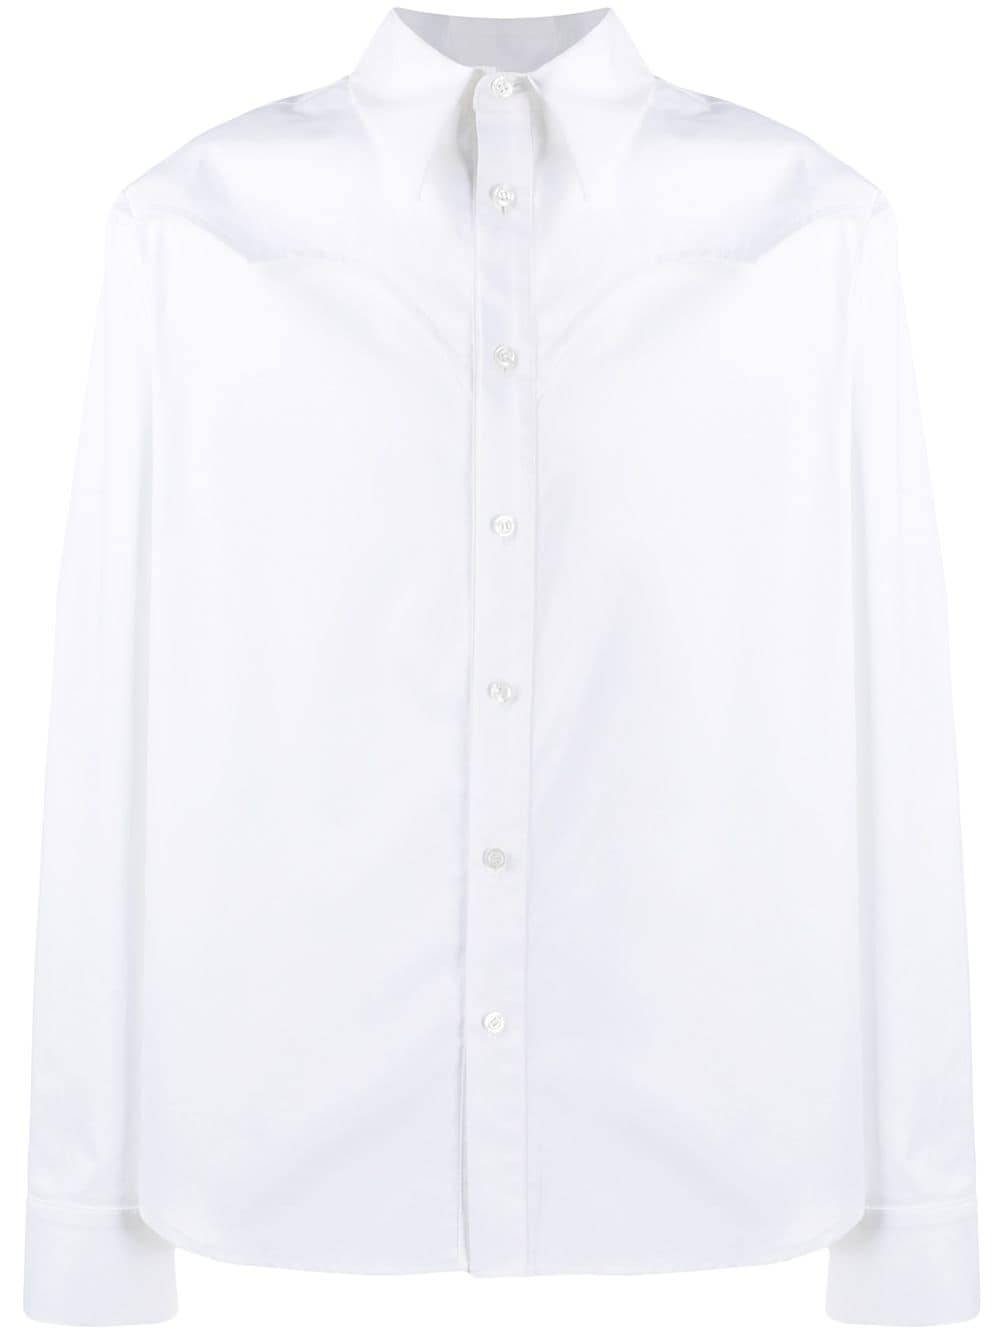 DUOltd wings detail shirt - White von DUOltd